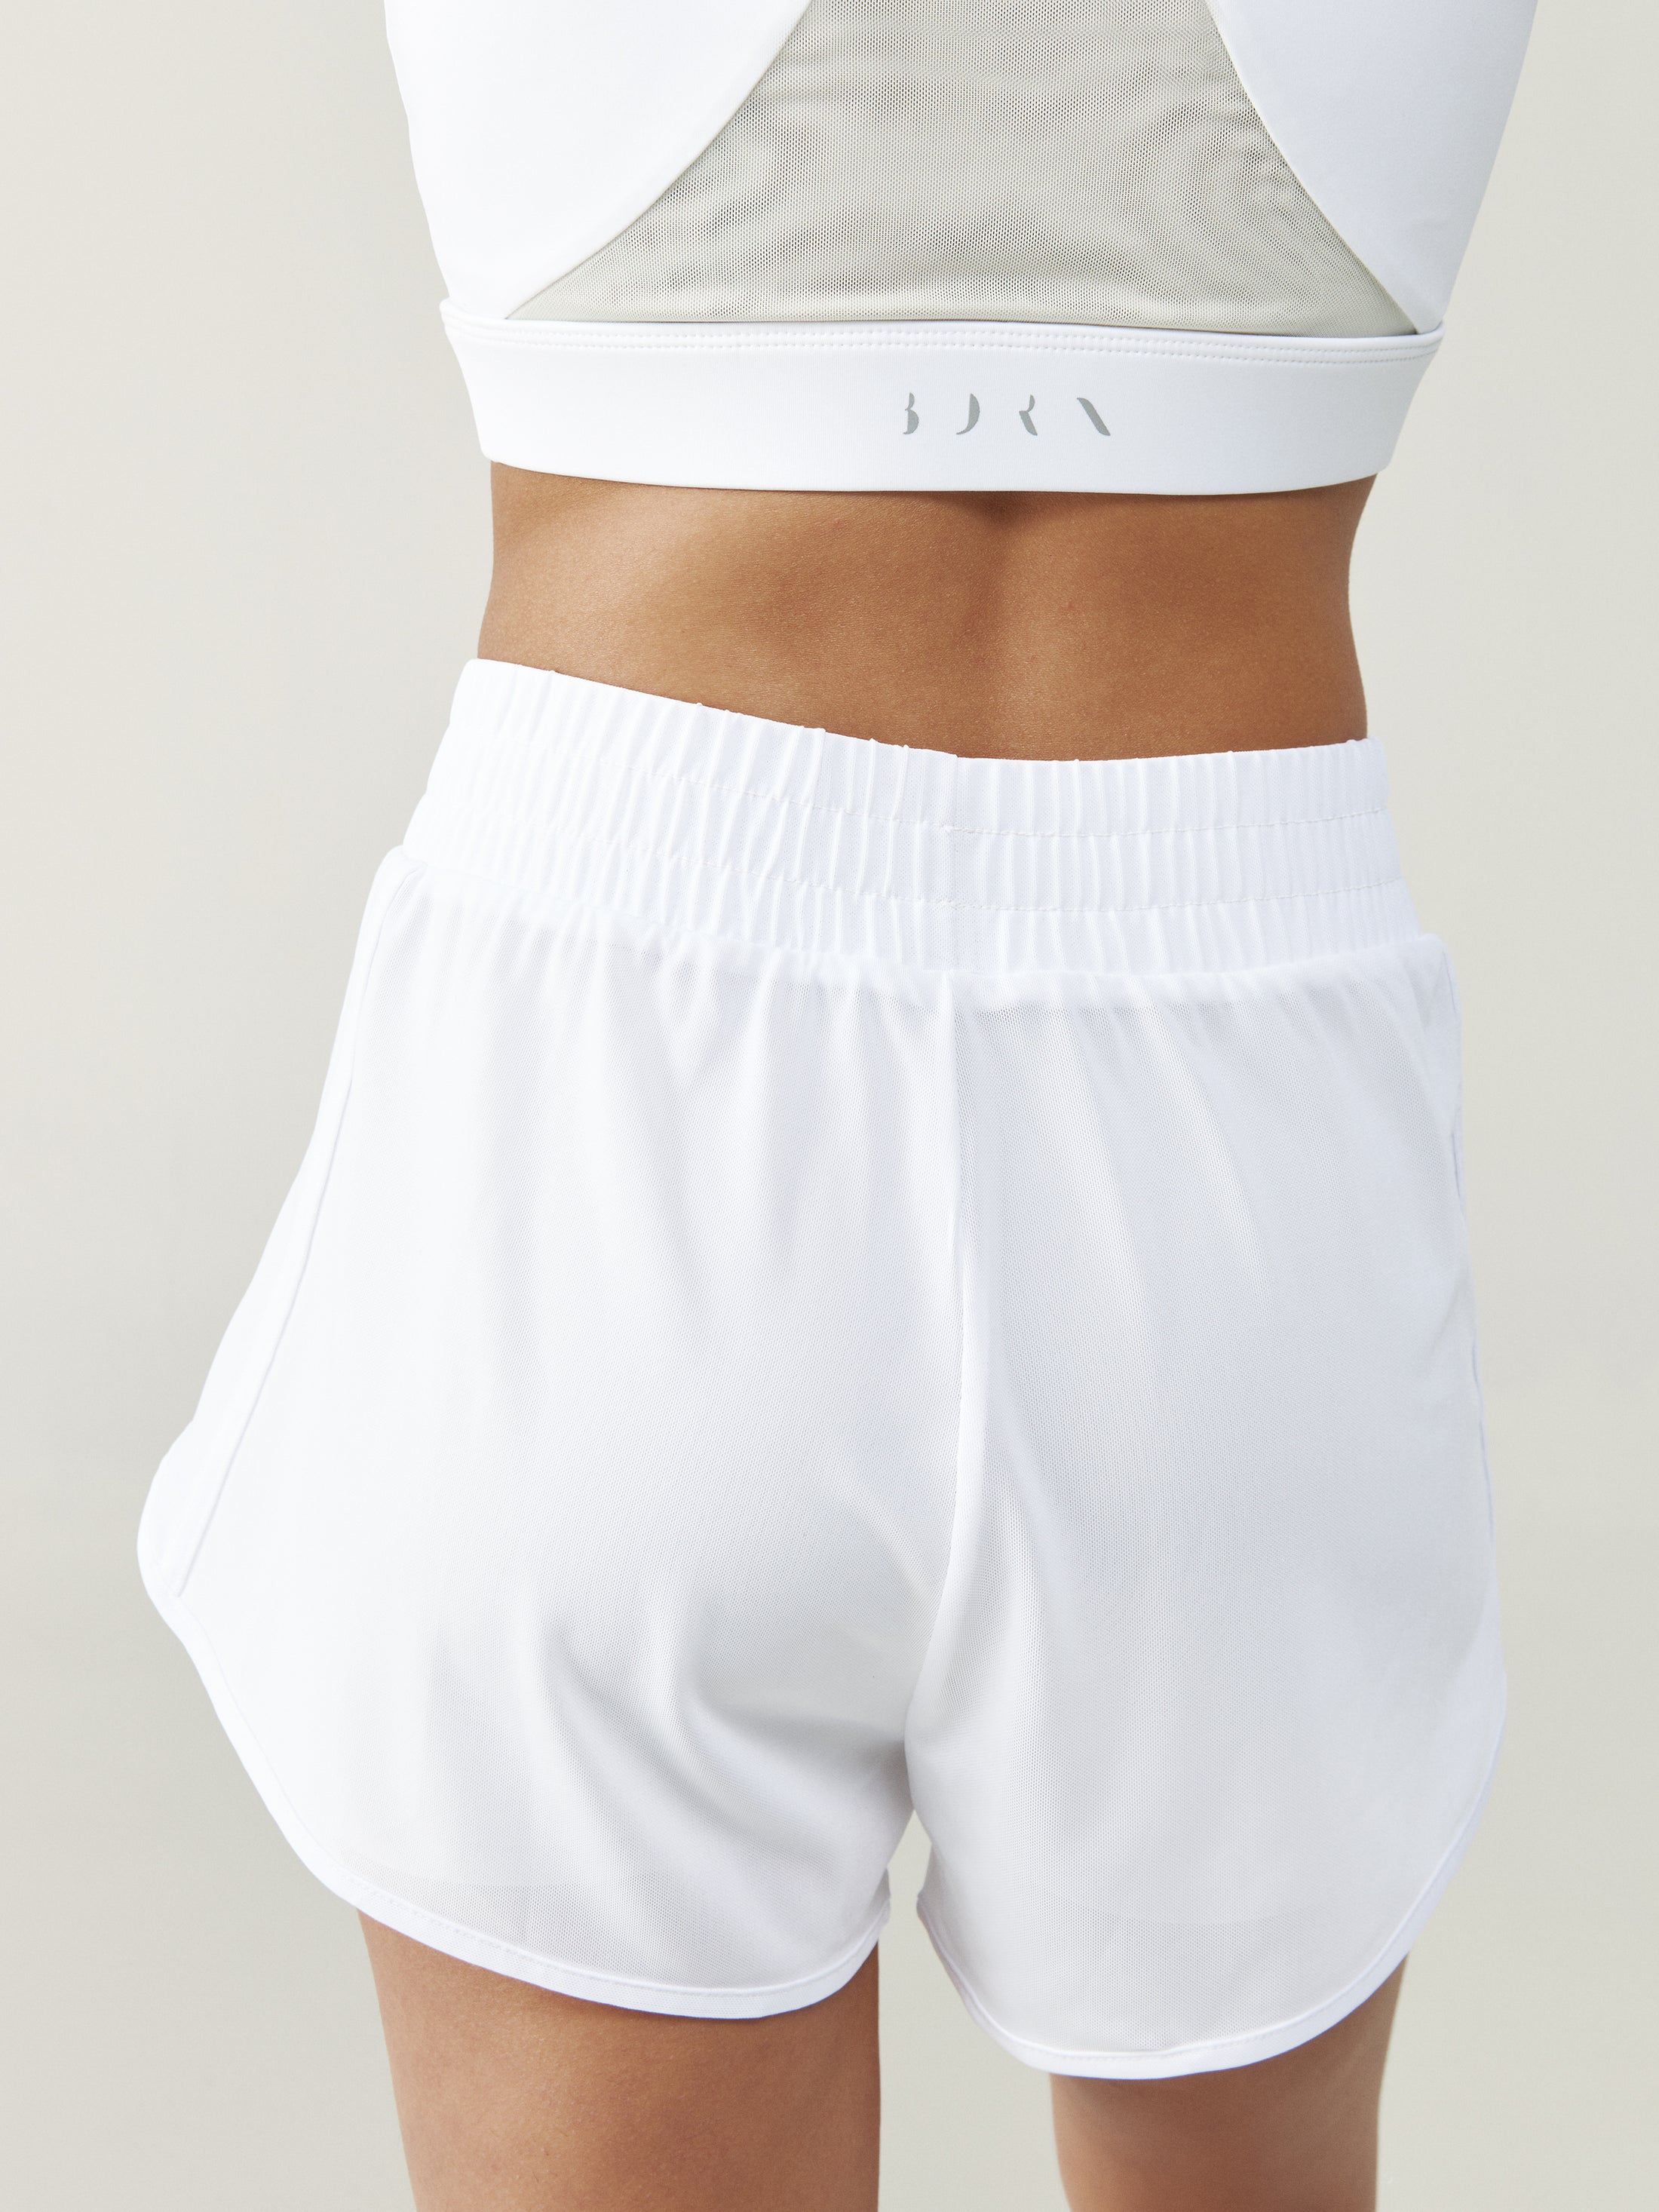 Padma 2.0 Shorts in White/Light Stone